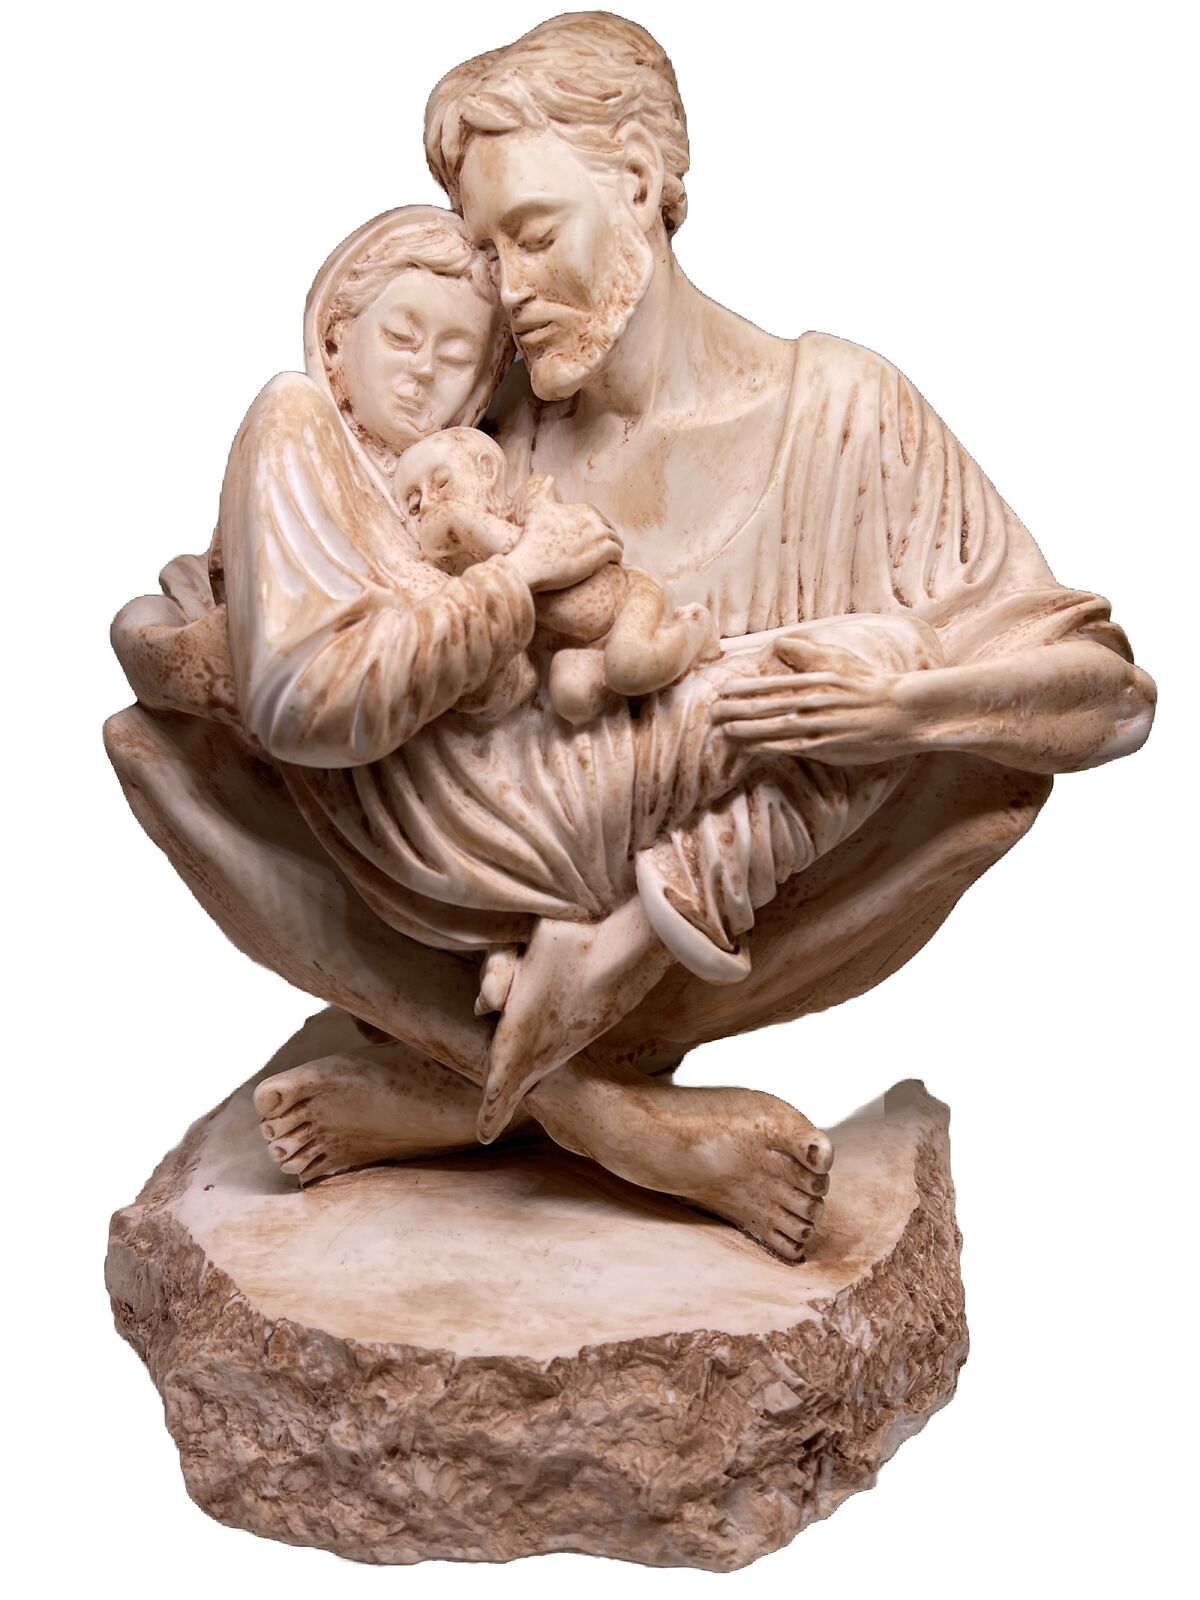 RARE 1999 Timothy P. Schmalz  “MATERNAL BOND” Holy Family Sculpture